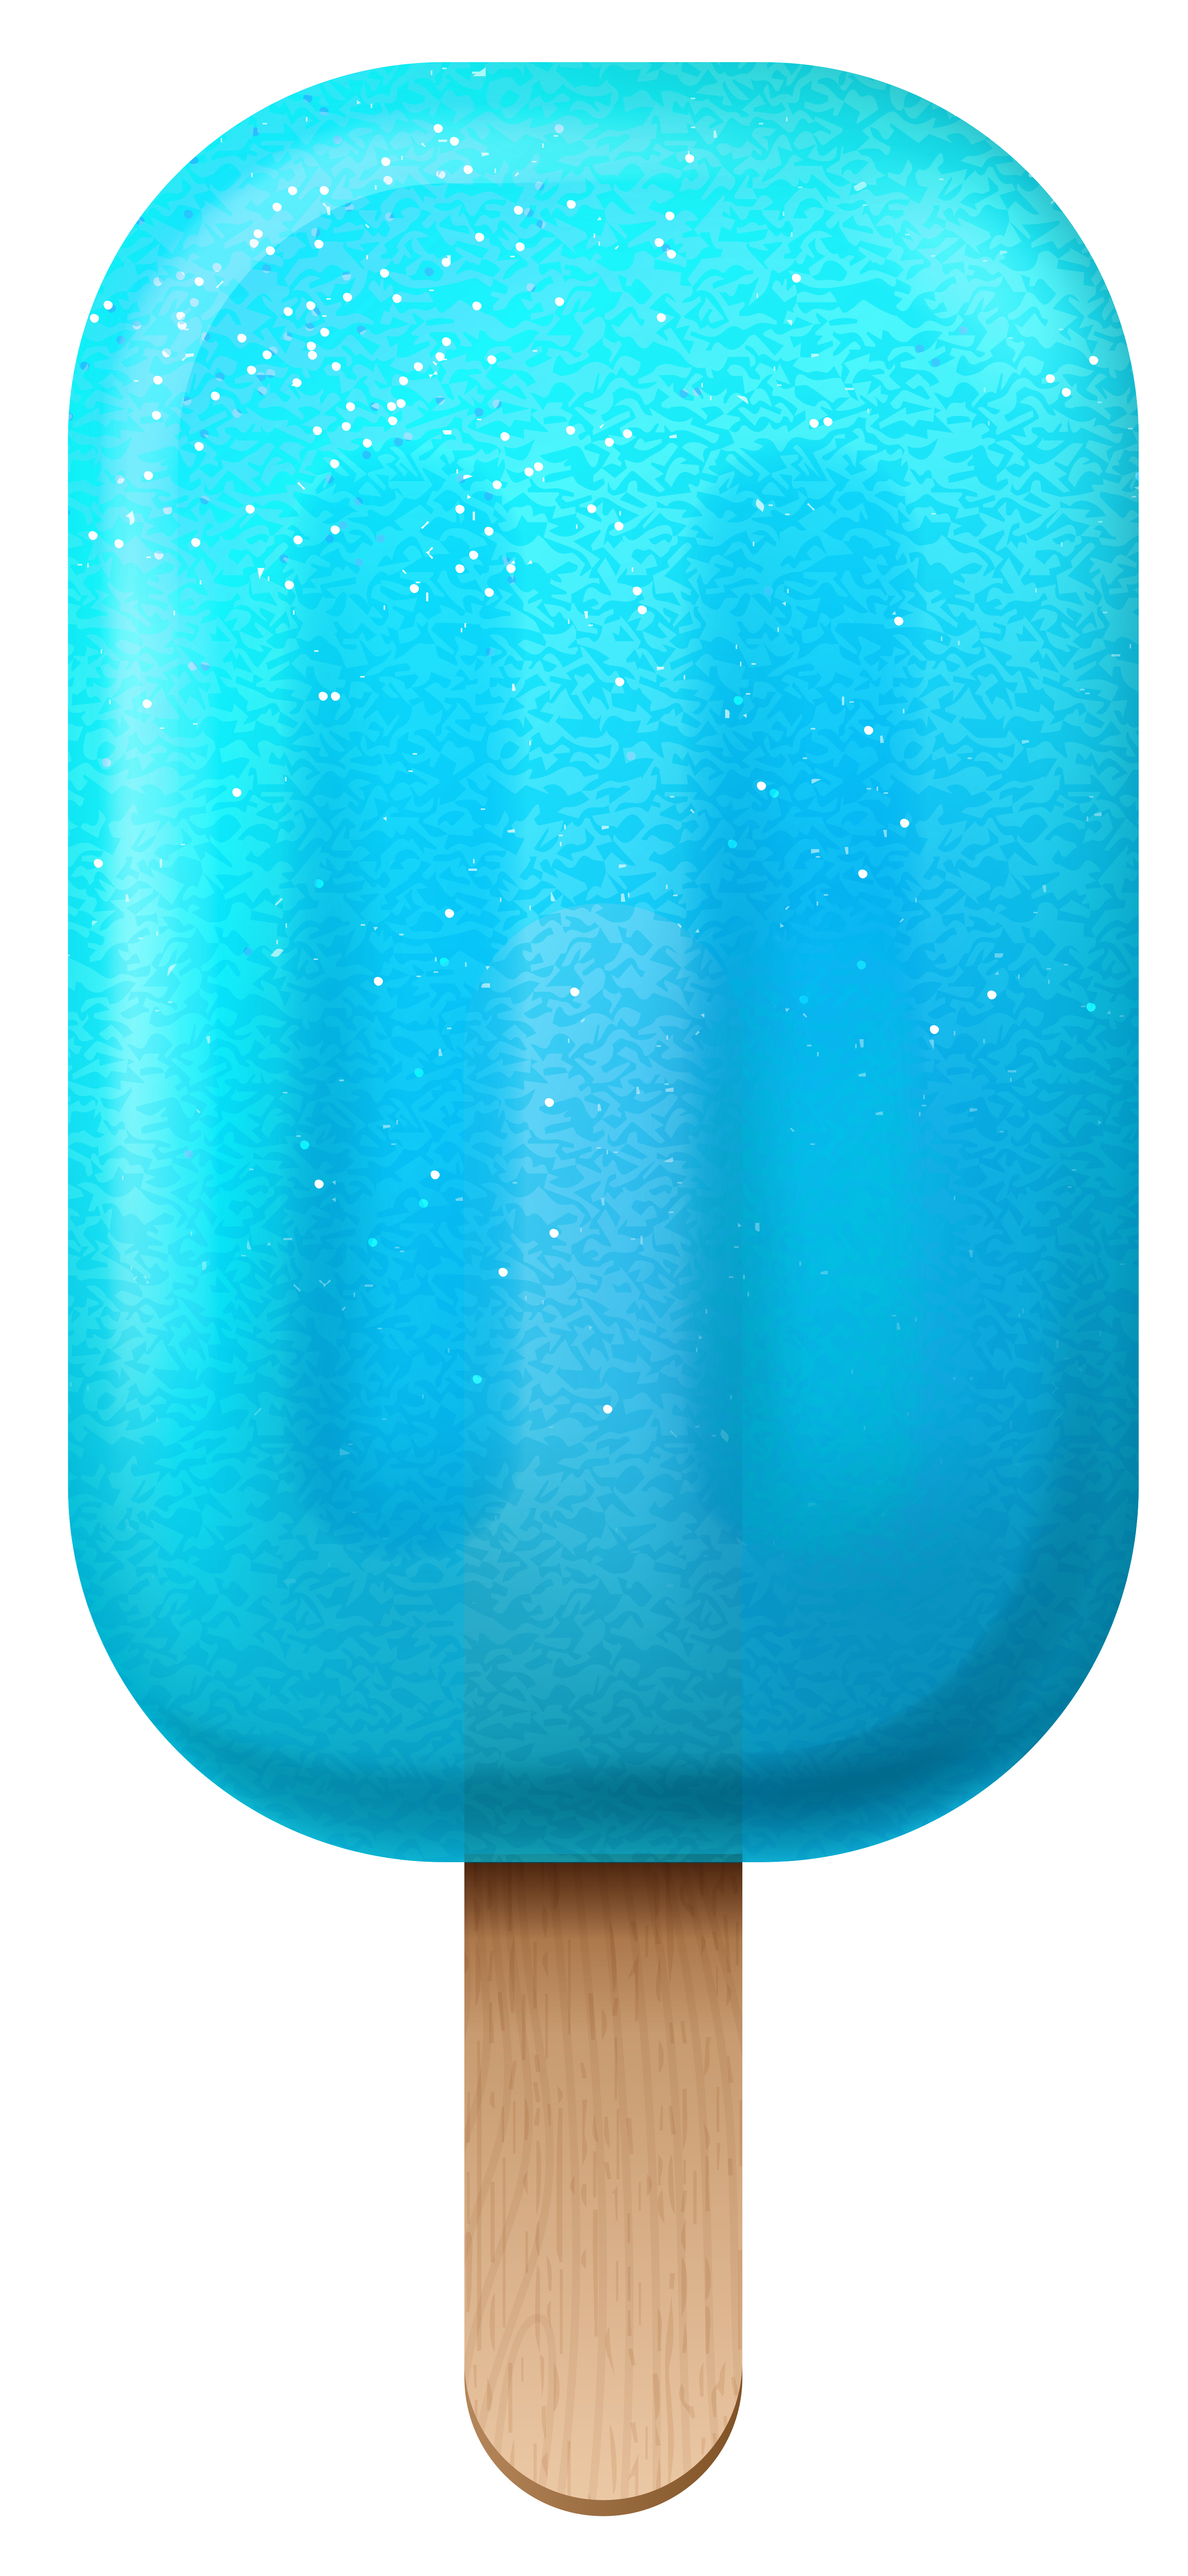 icecream clipart blue